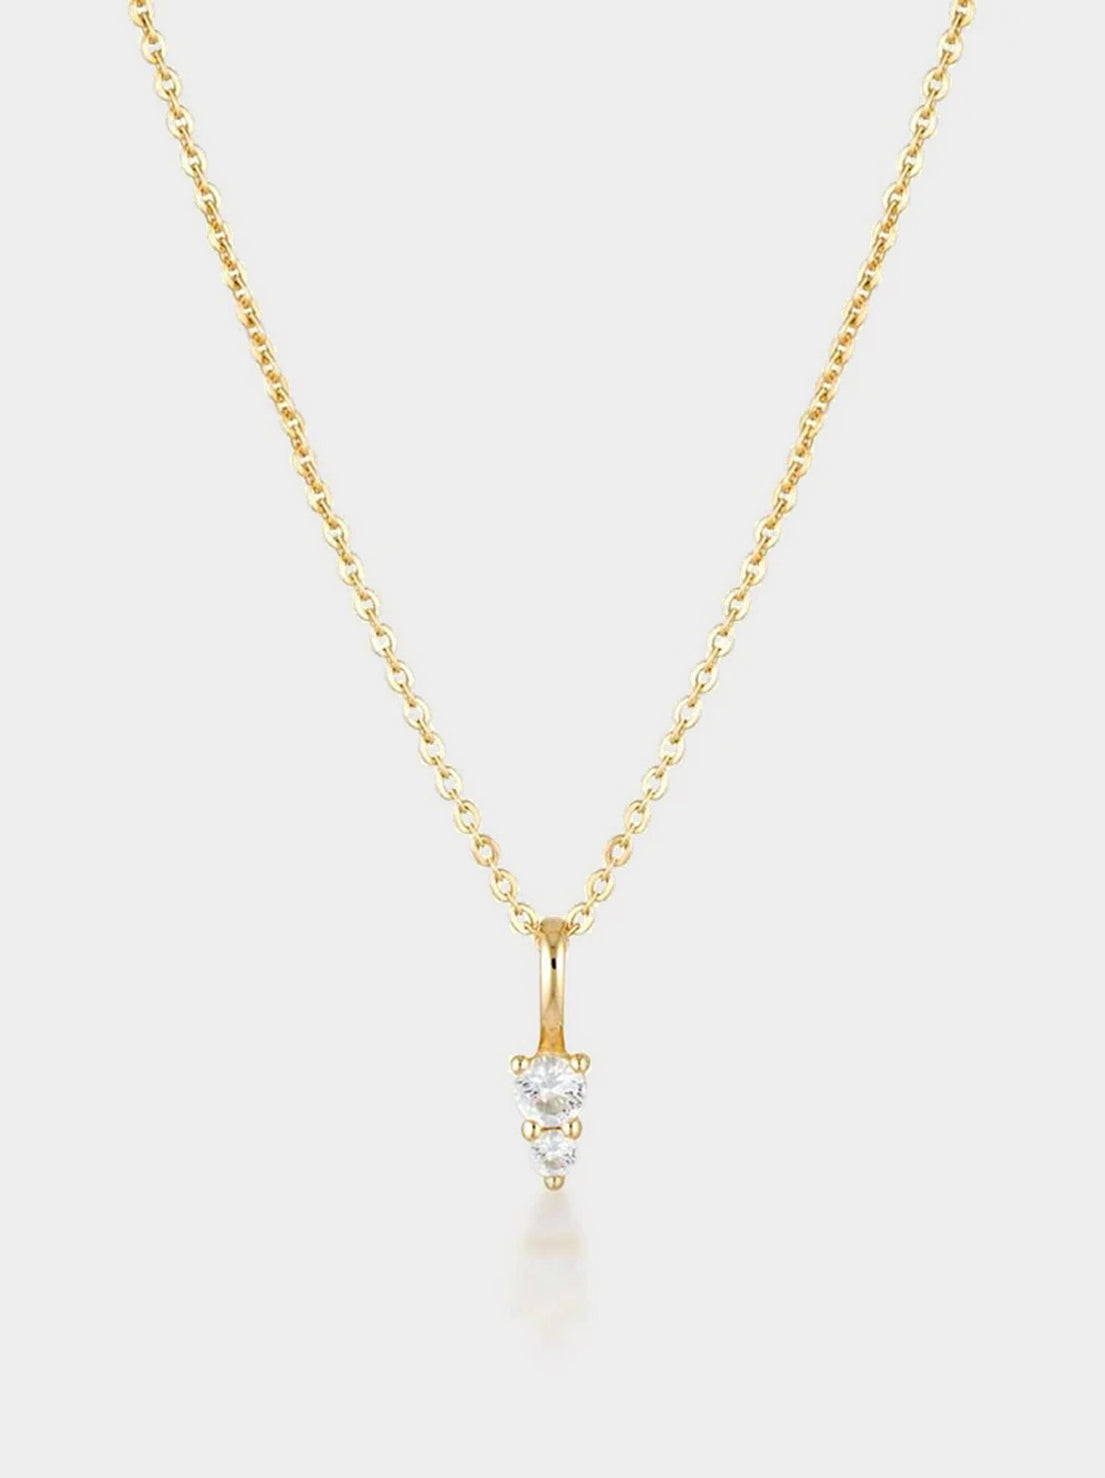 Linda Tahija - Birthstone Binary Gemstone Necklace - White Topaz - Gold Plated